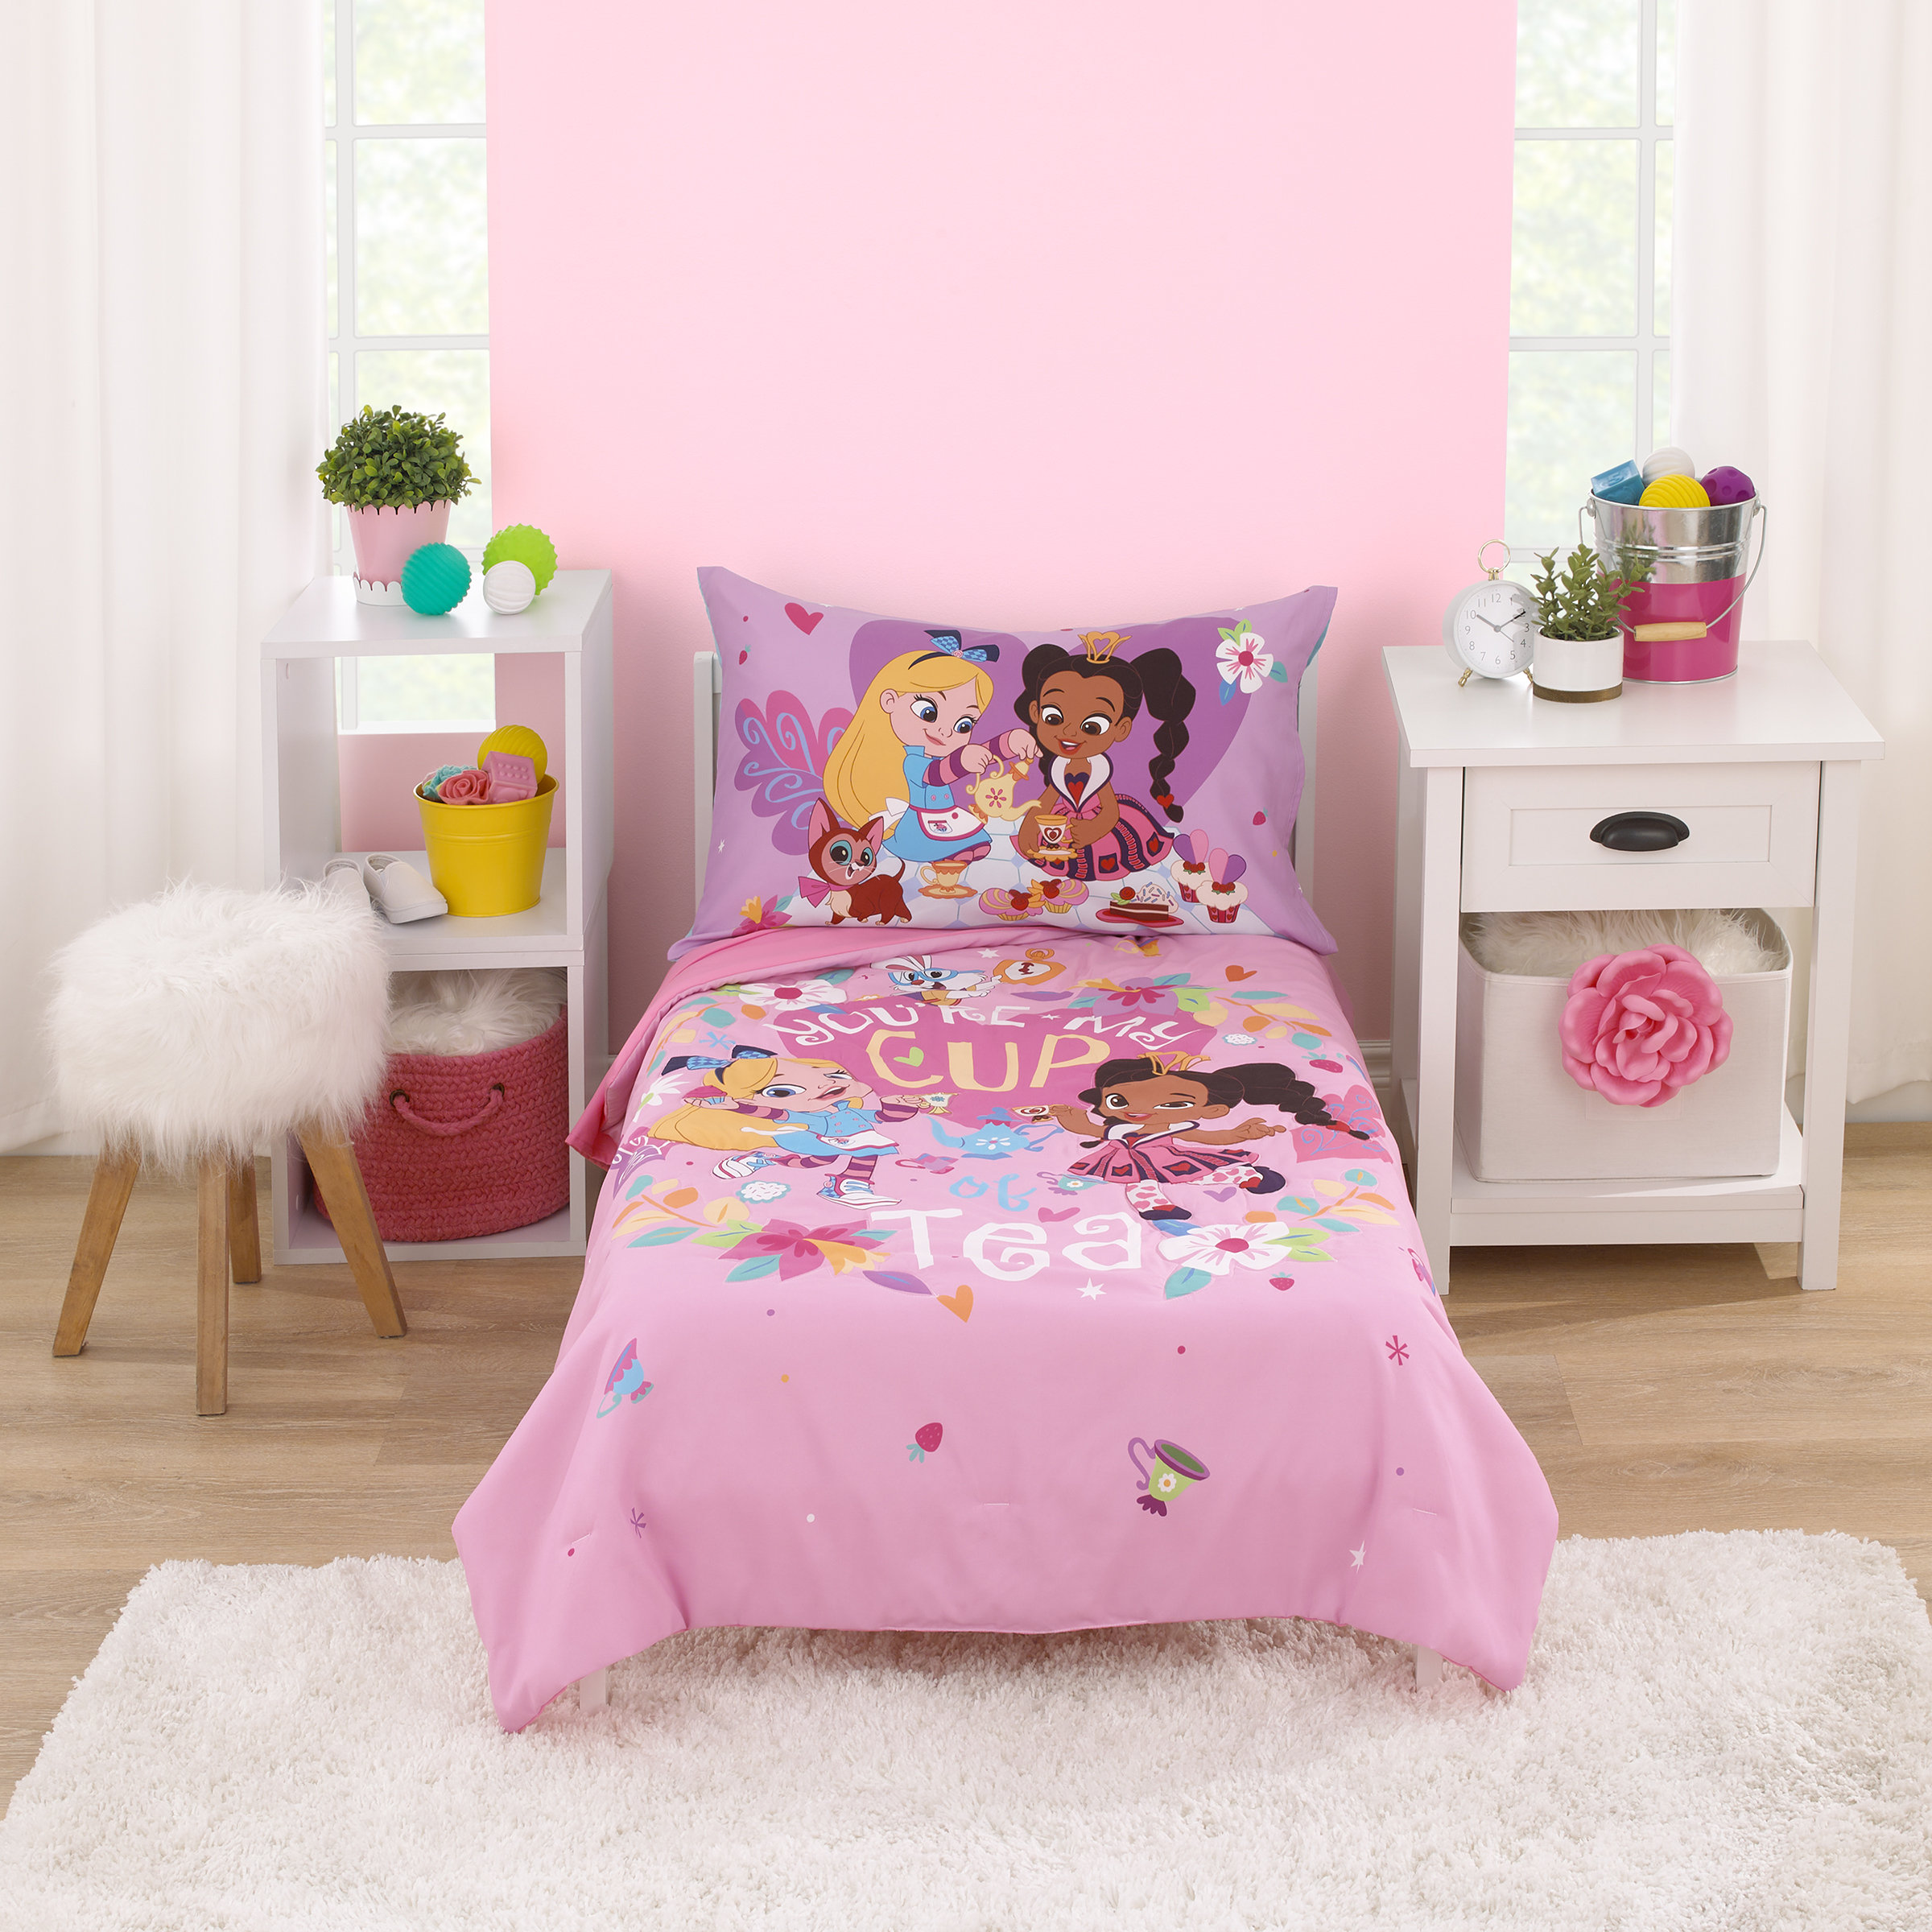 Space Saving Dorm Room Ideas - Princess Pinky Girl